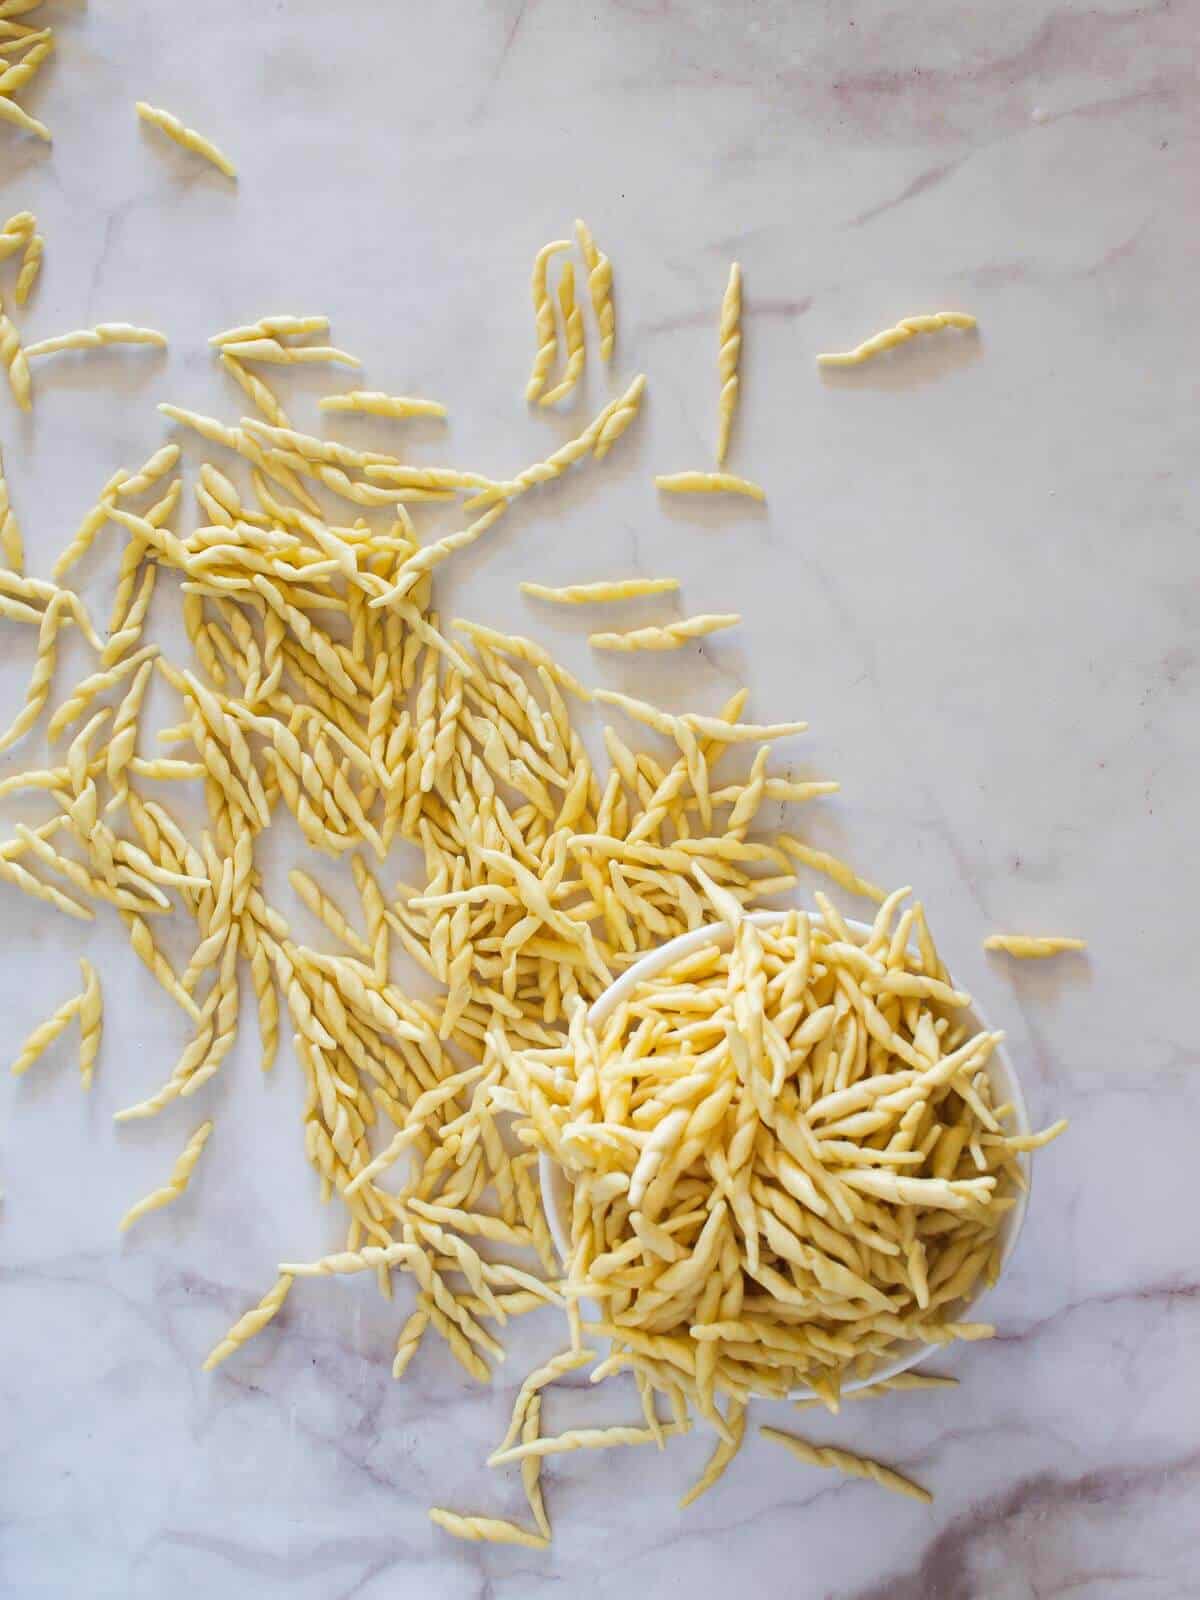 trofie pasta on a table